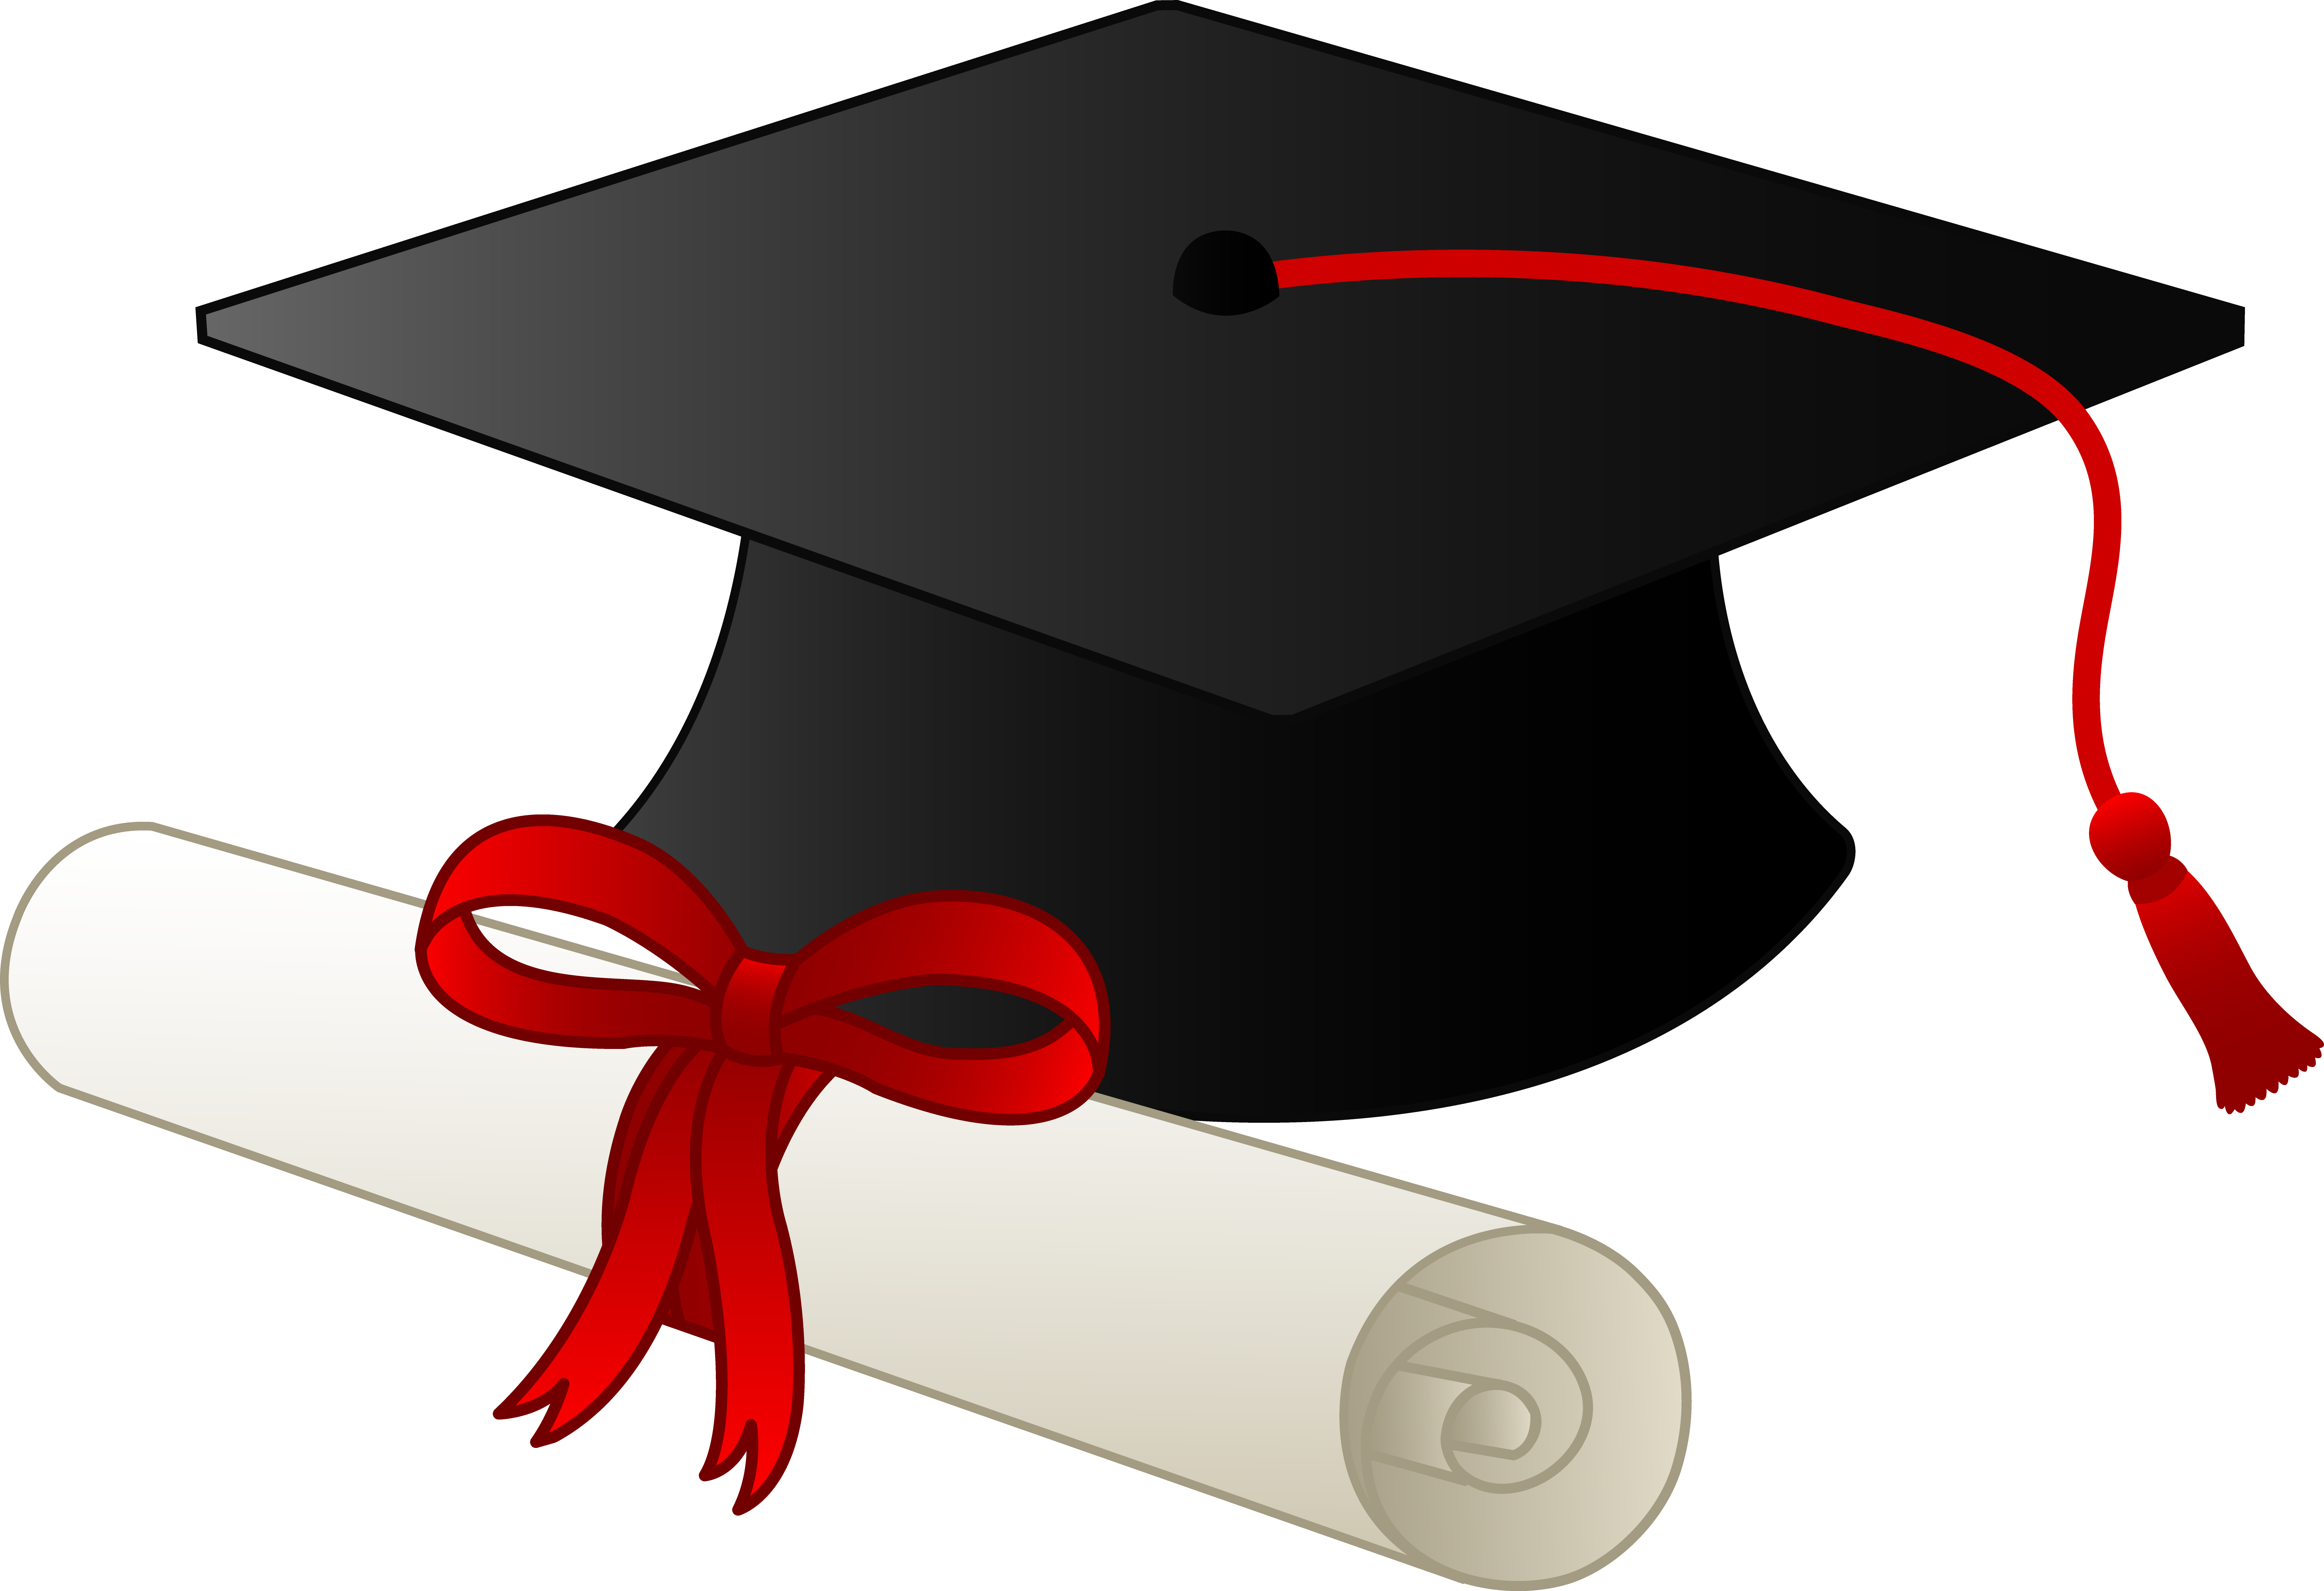 Pictures Of Graduation Caps